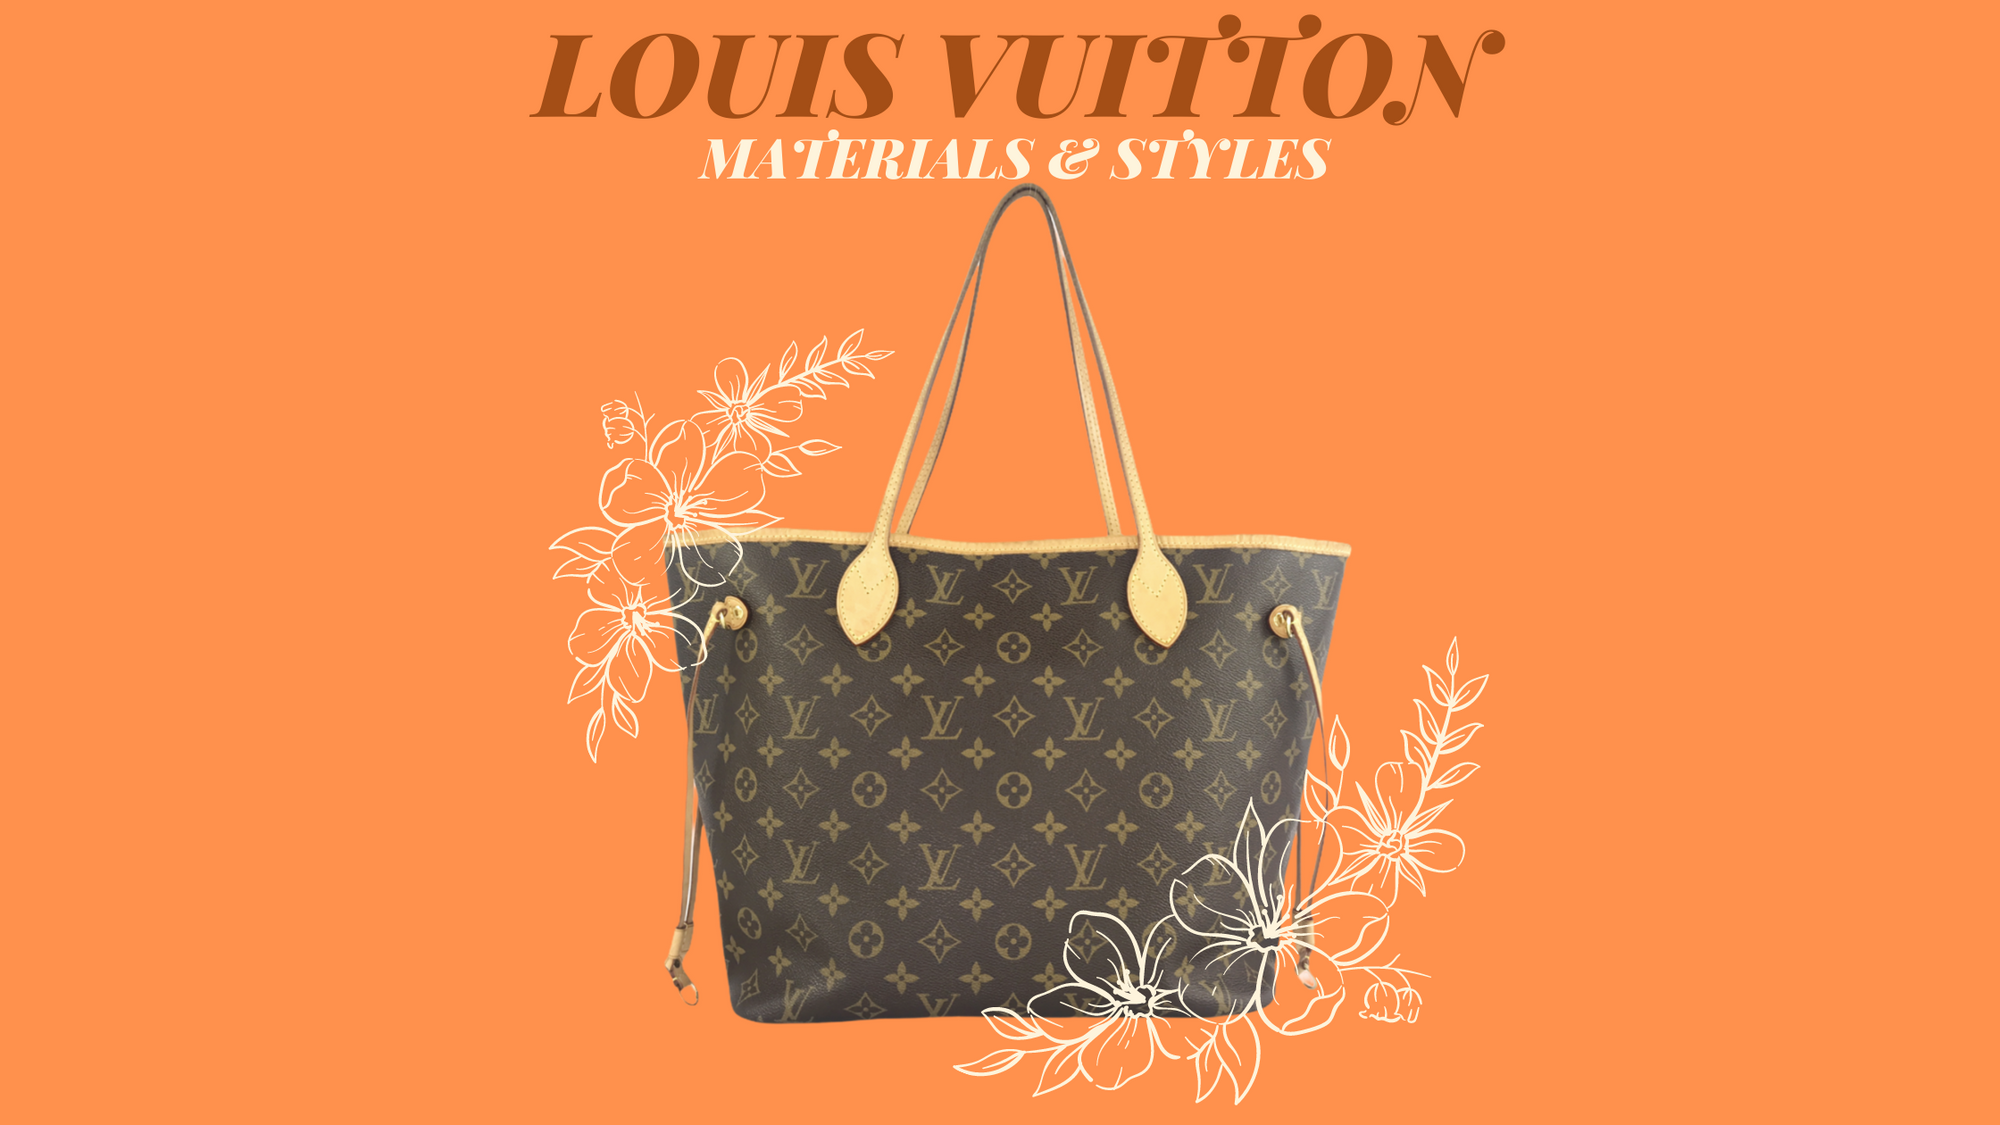 Louis Vuitton Materials & Styles